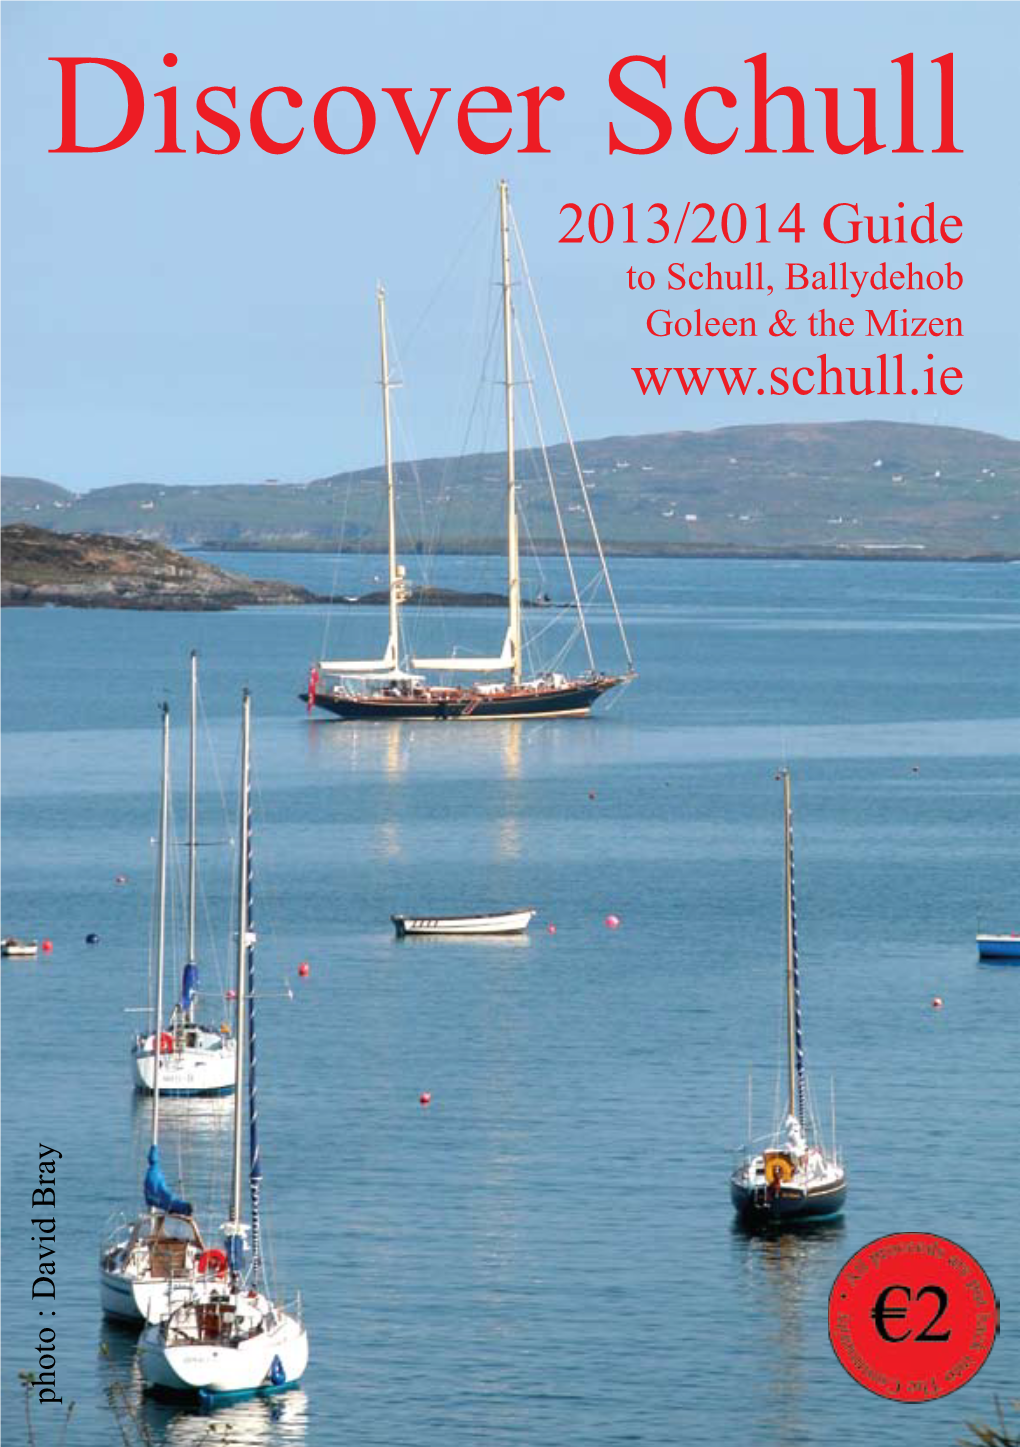 Discover Schull 2013/2014 Guide to Schull, Ballydehob Goleen & the Mizen Photo : David Bray